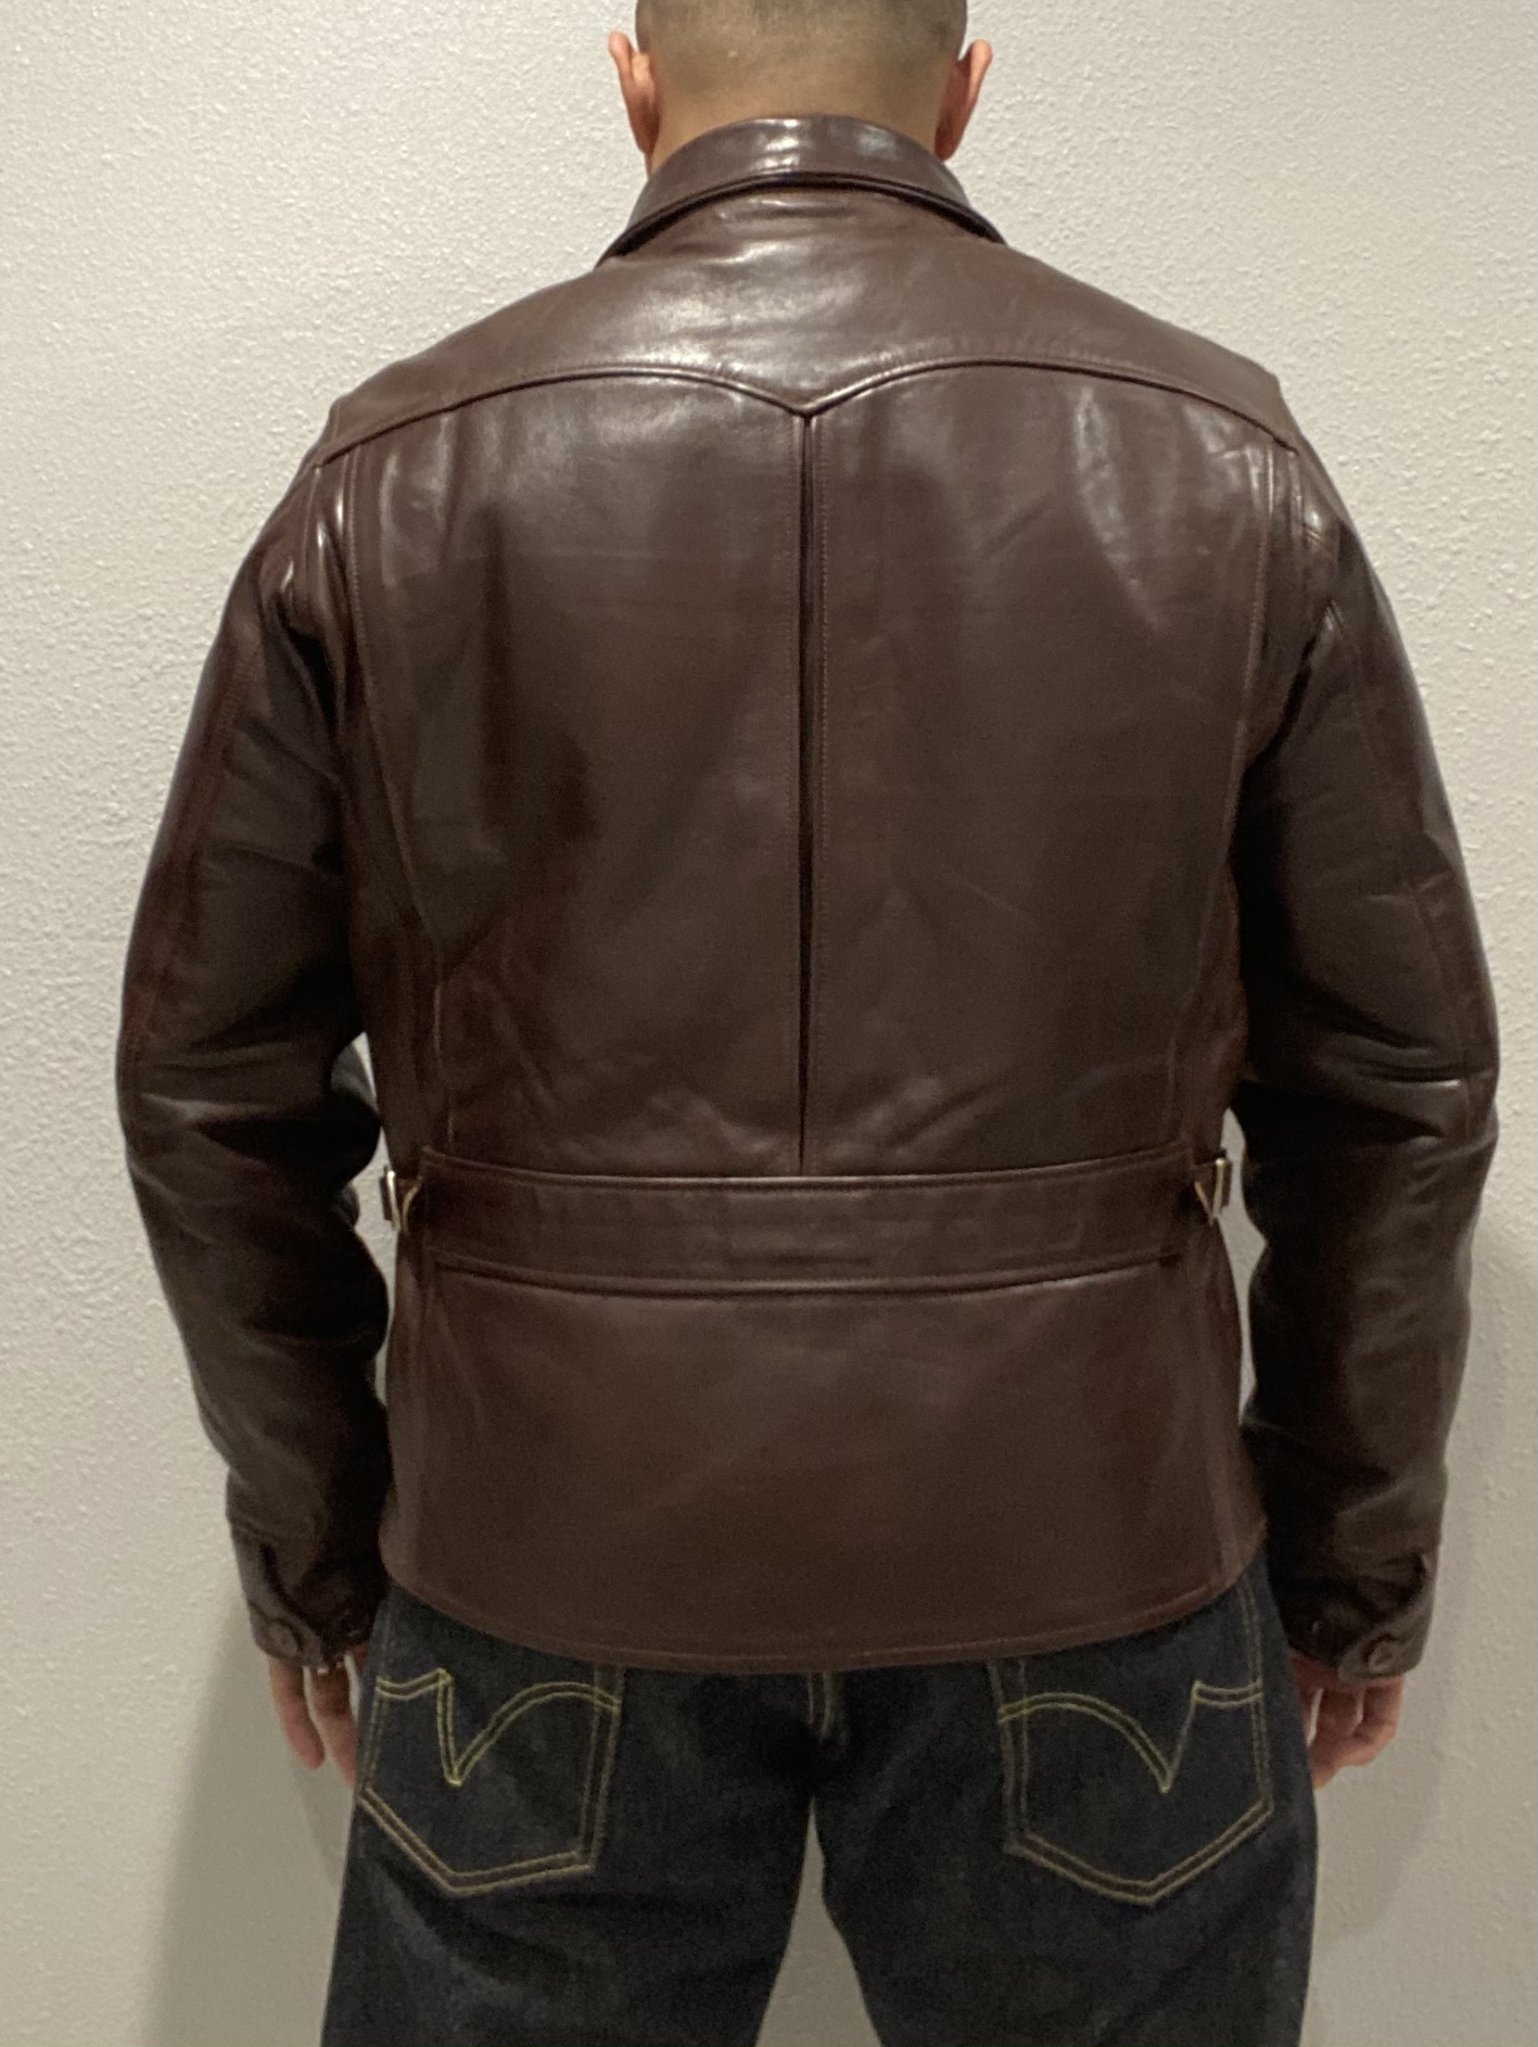 The Dave Sheeley Custom Leather Jacket Thread | The Fedora Lounge